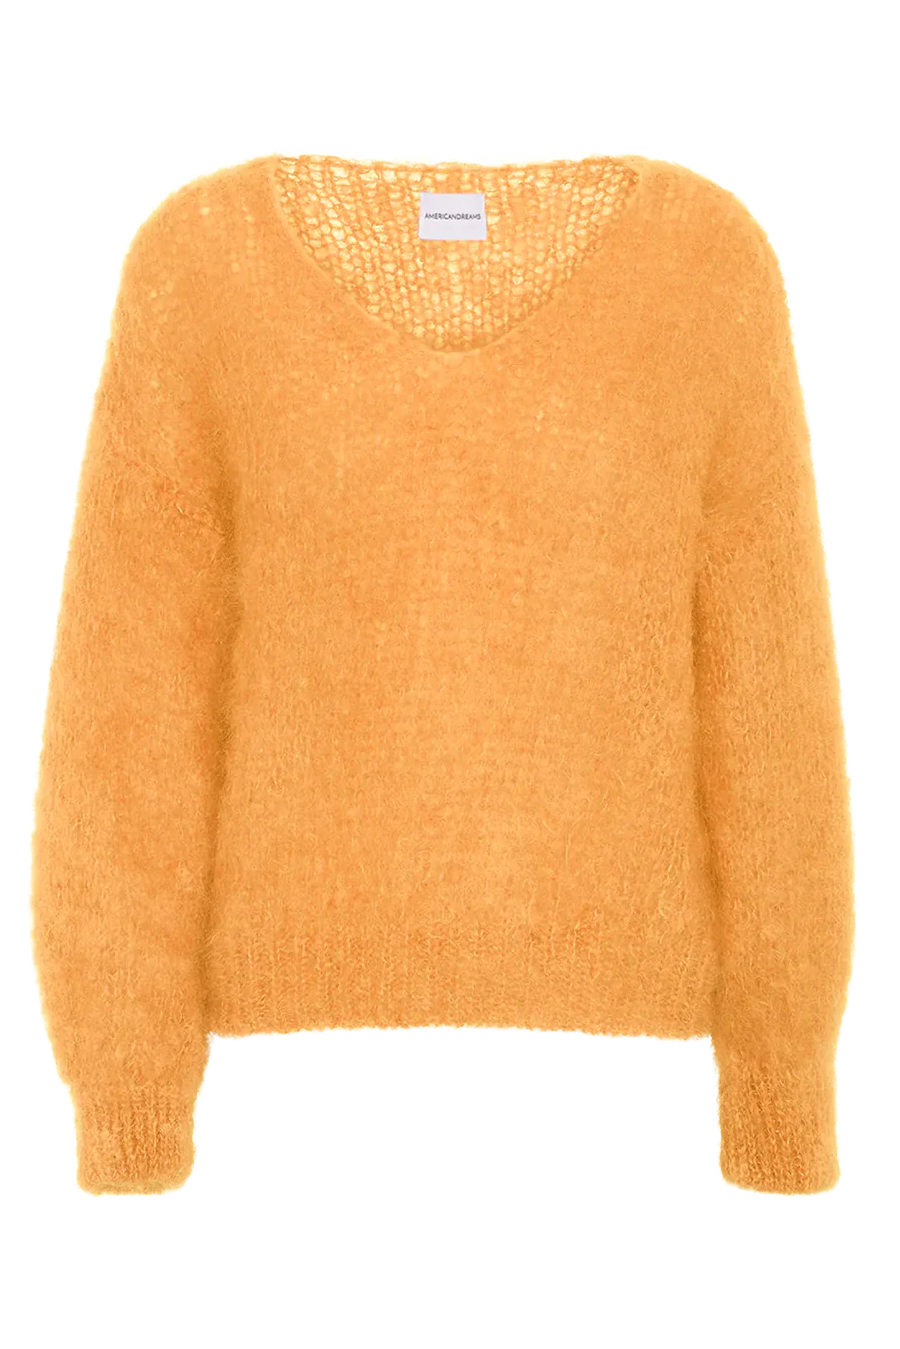 Milana LS Mohair Knit Light Orange